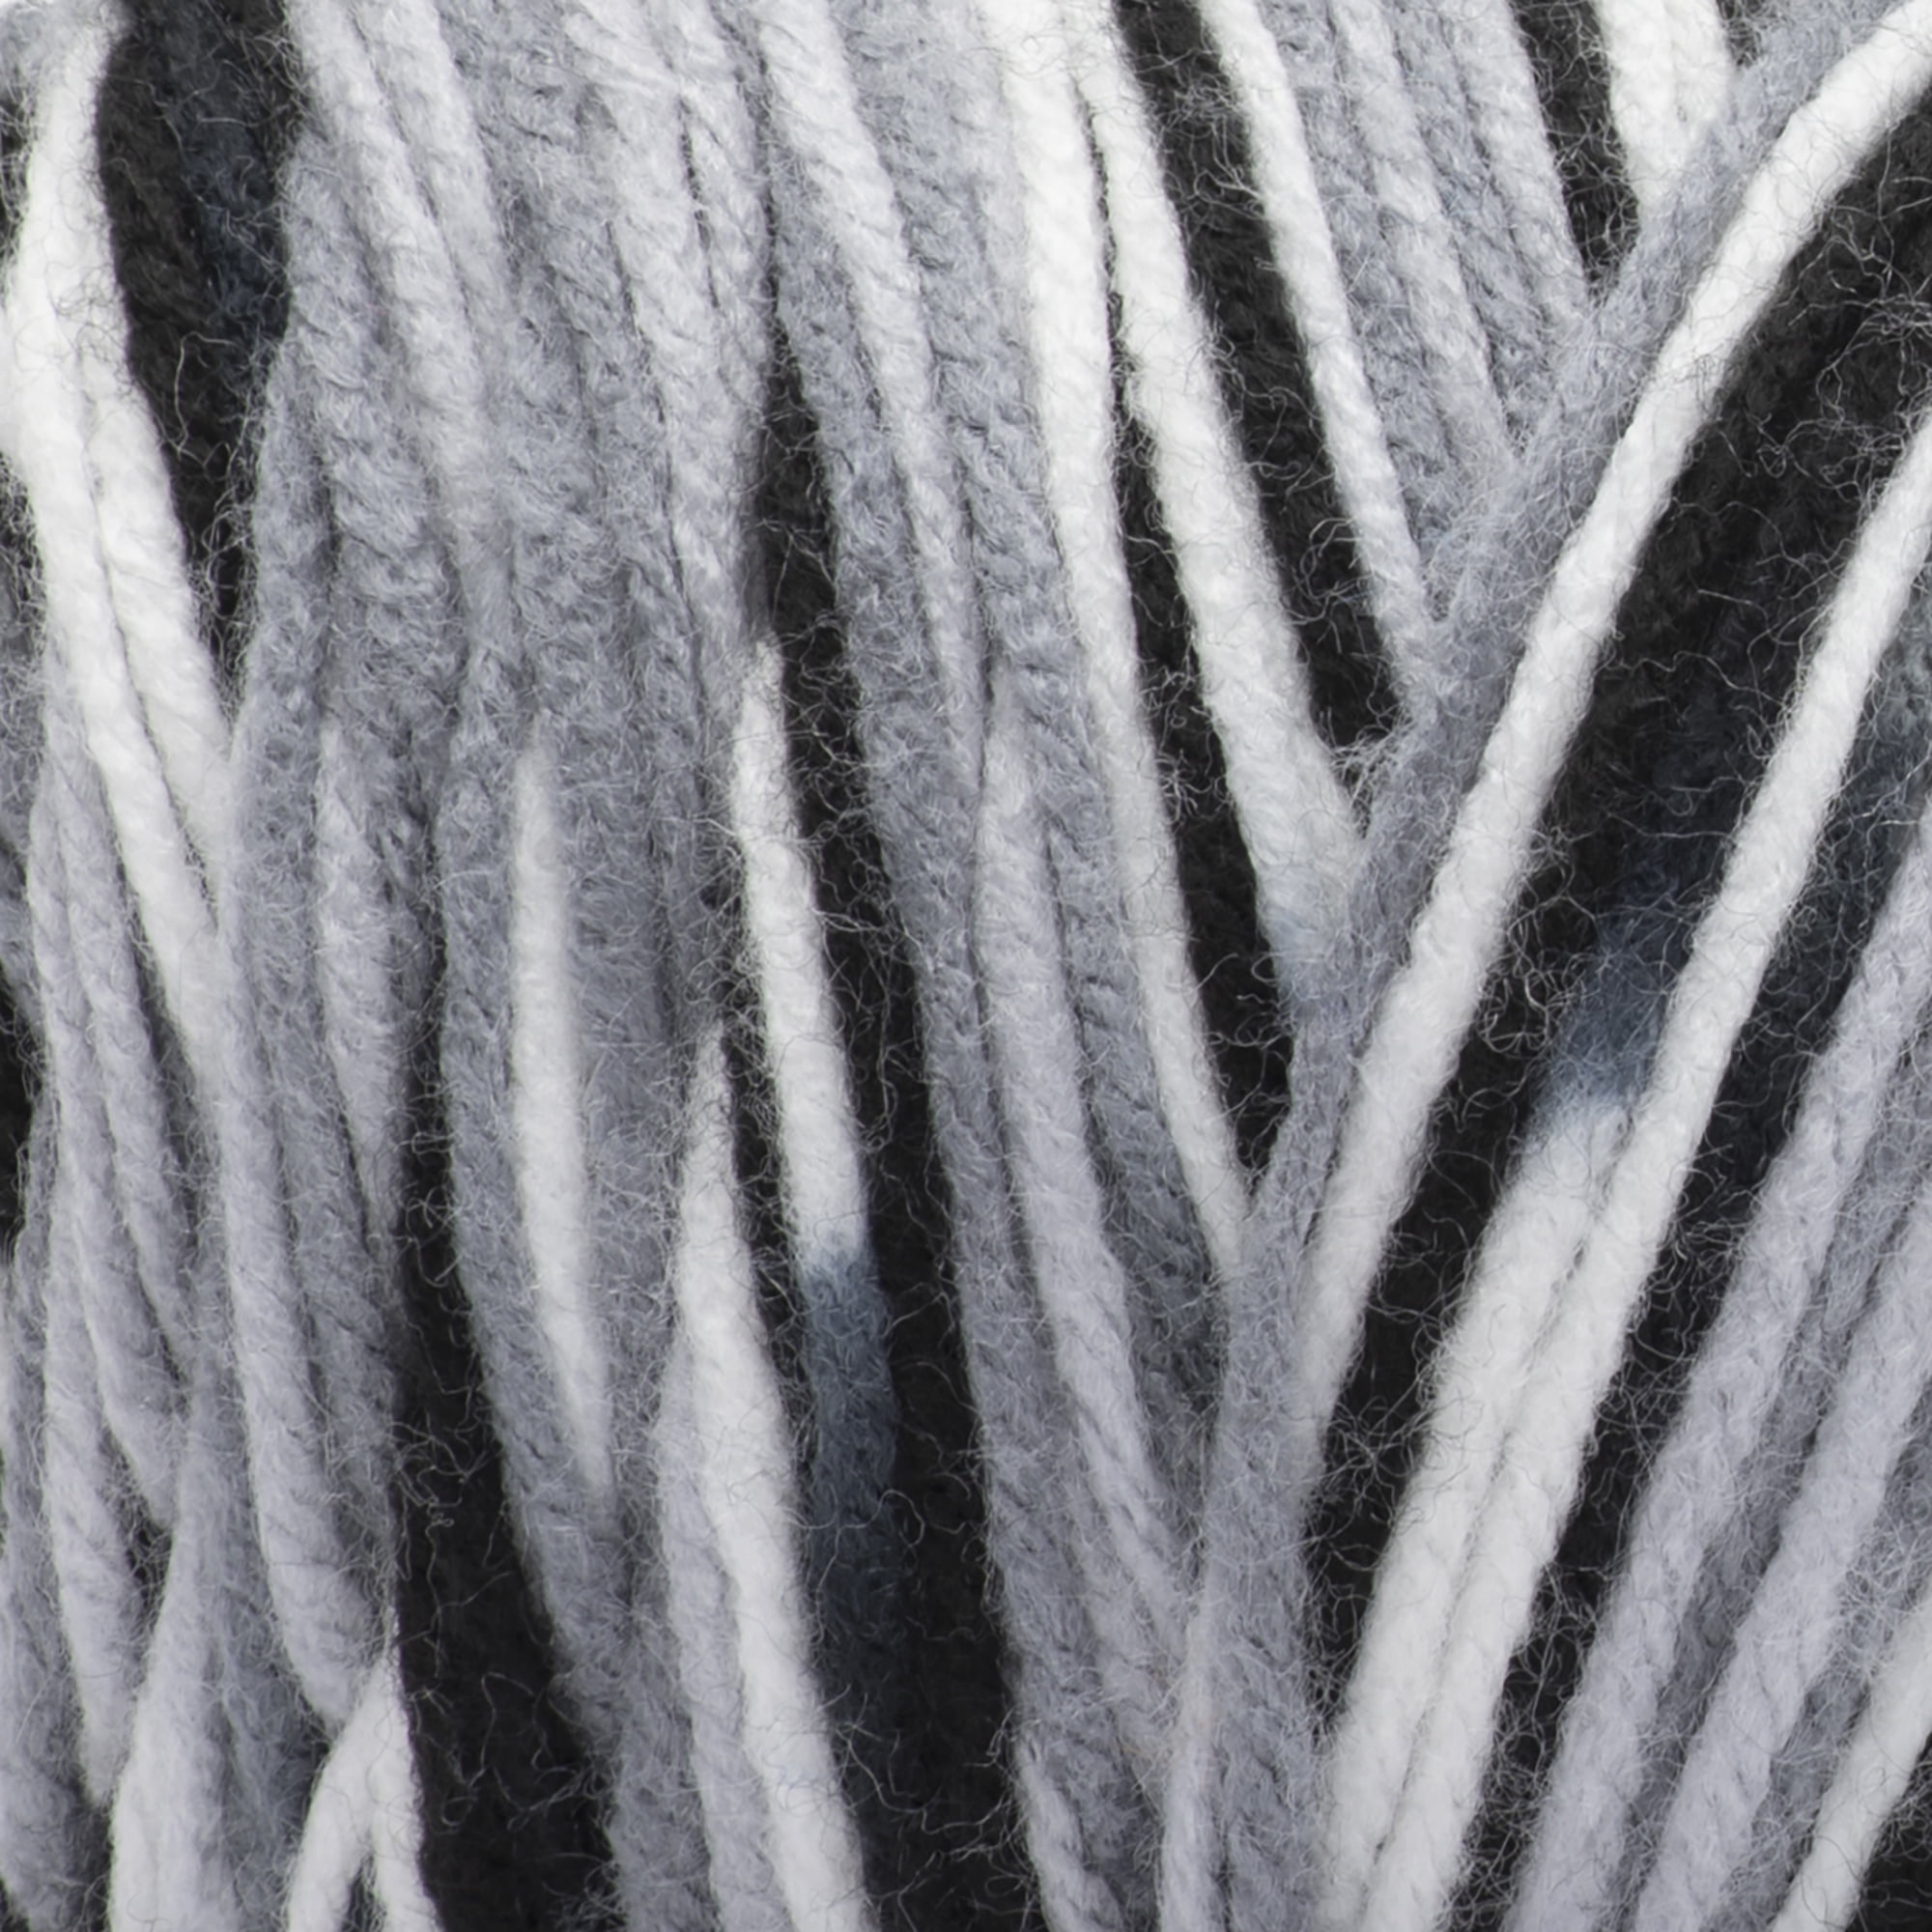 Mainstays™ 100% Acrylic #4 Medium Acrylic Yarn, Purple Multi 5oz/142g, 285  Yards (10 Pack) 